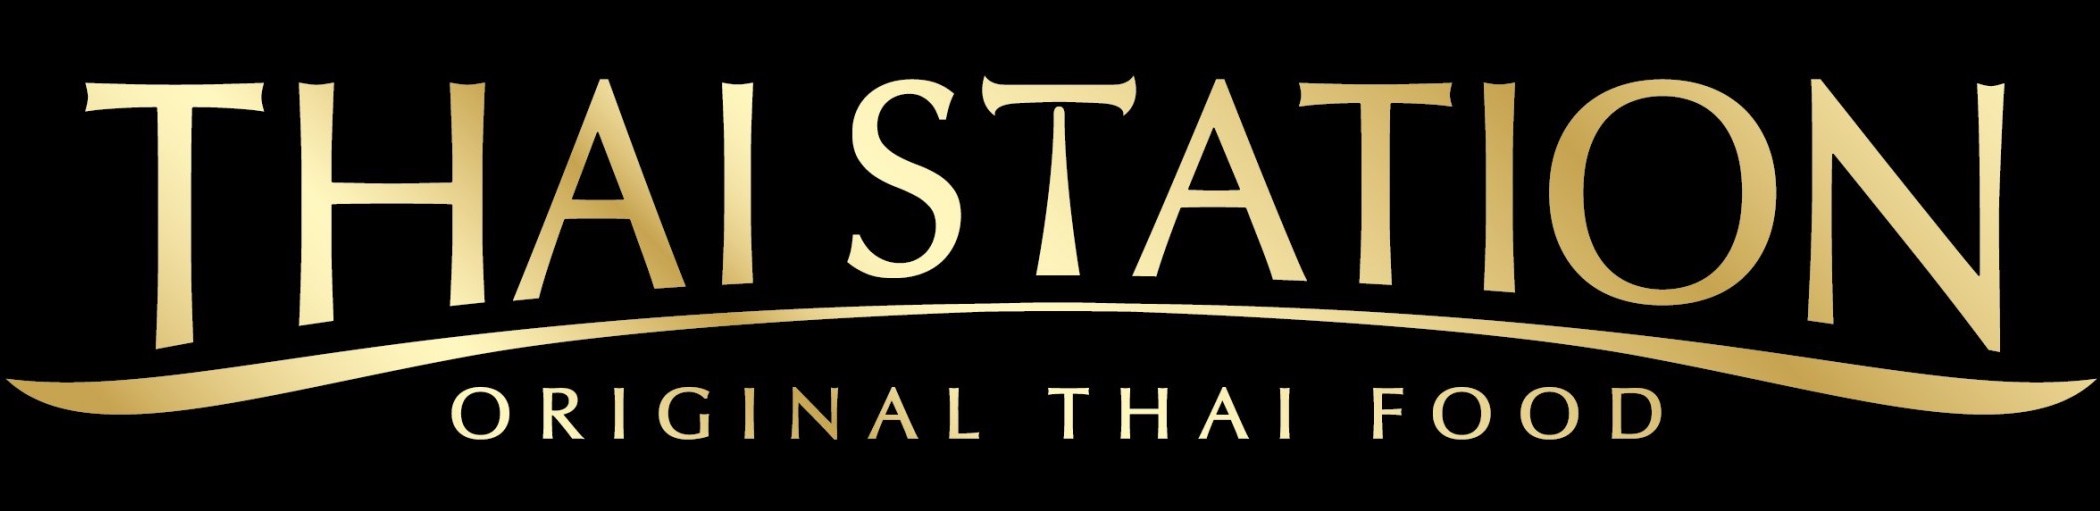 Logo Thai Station - 3800 Sint-Truiden